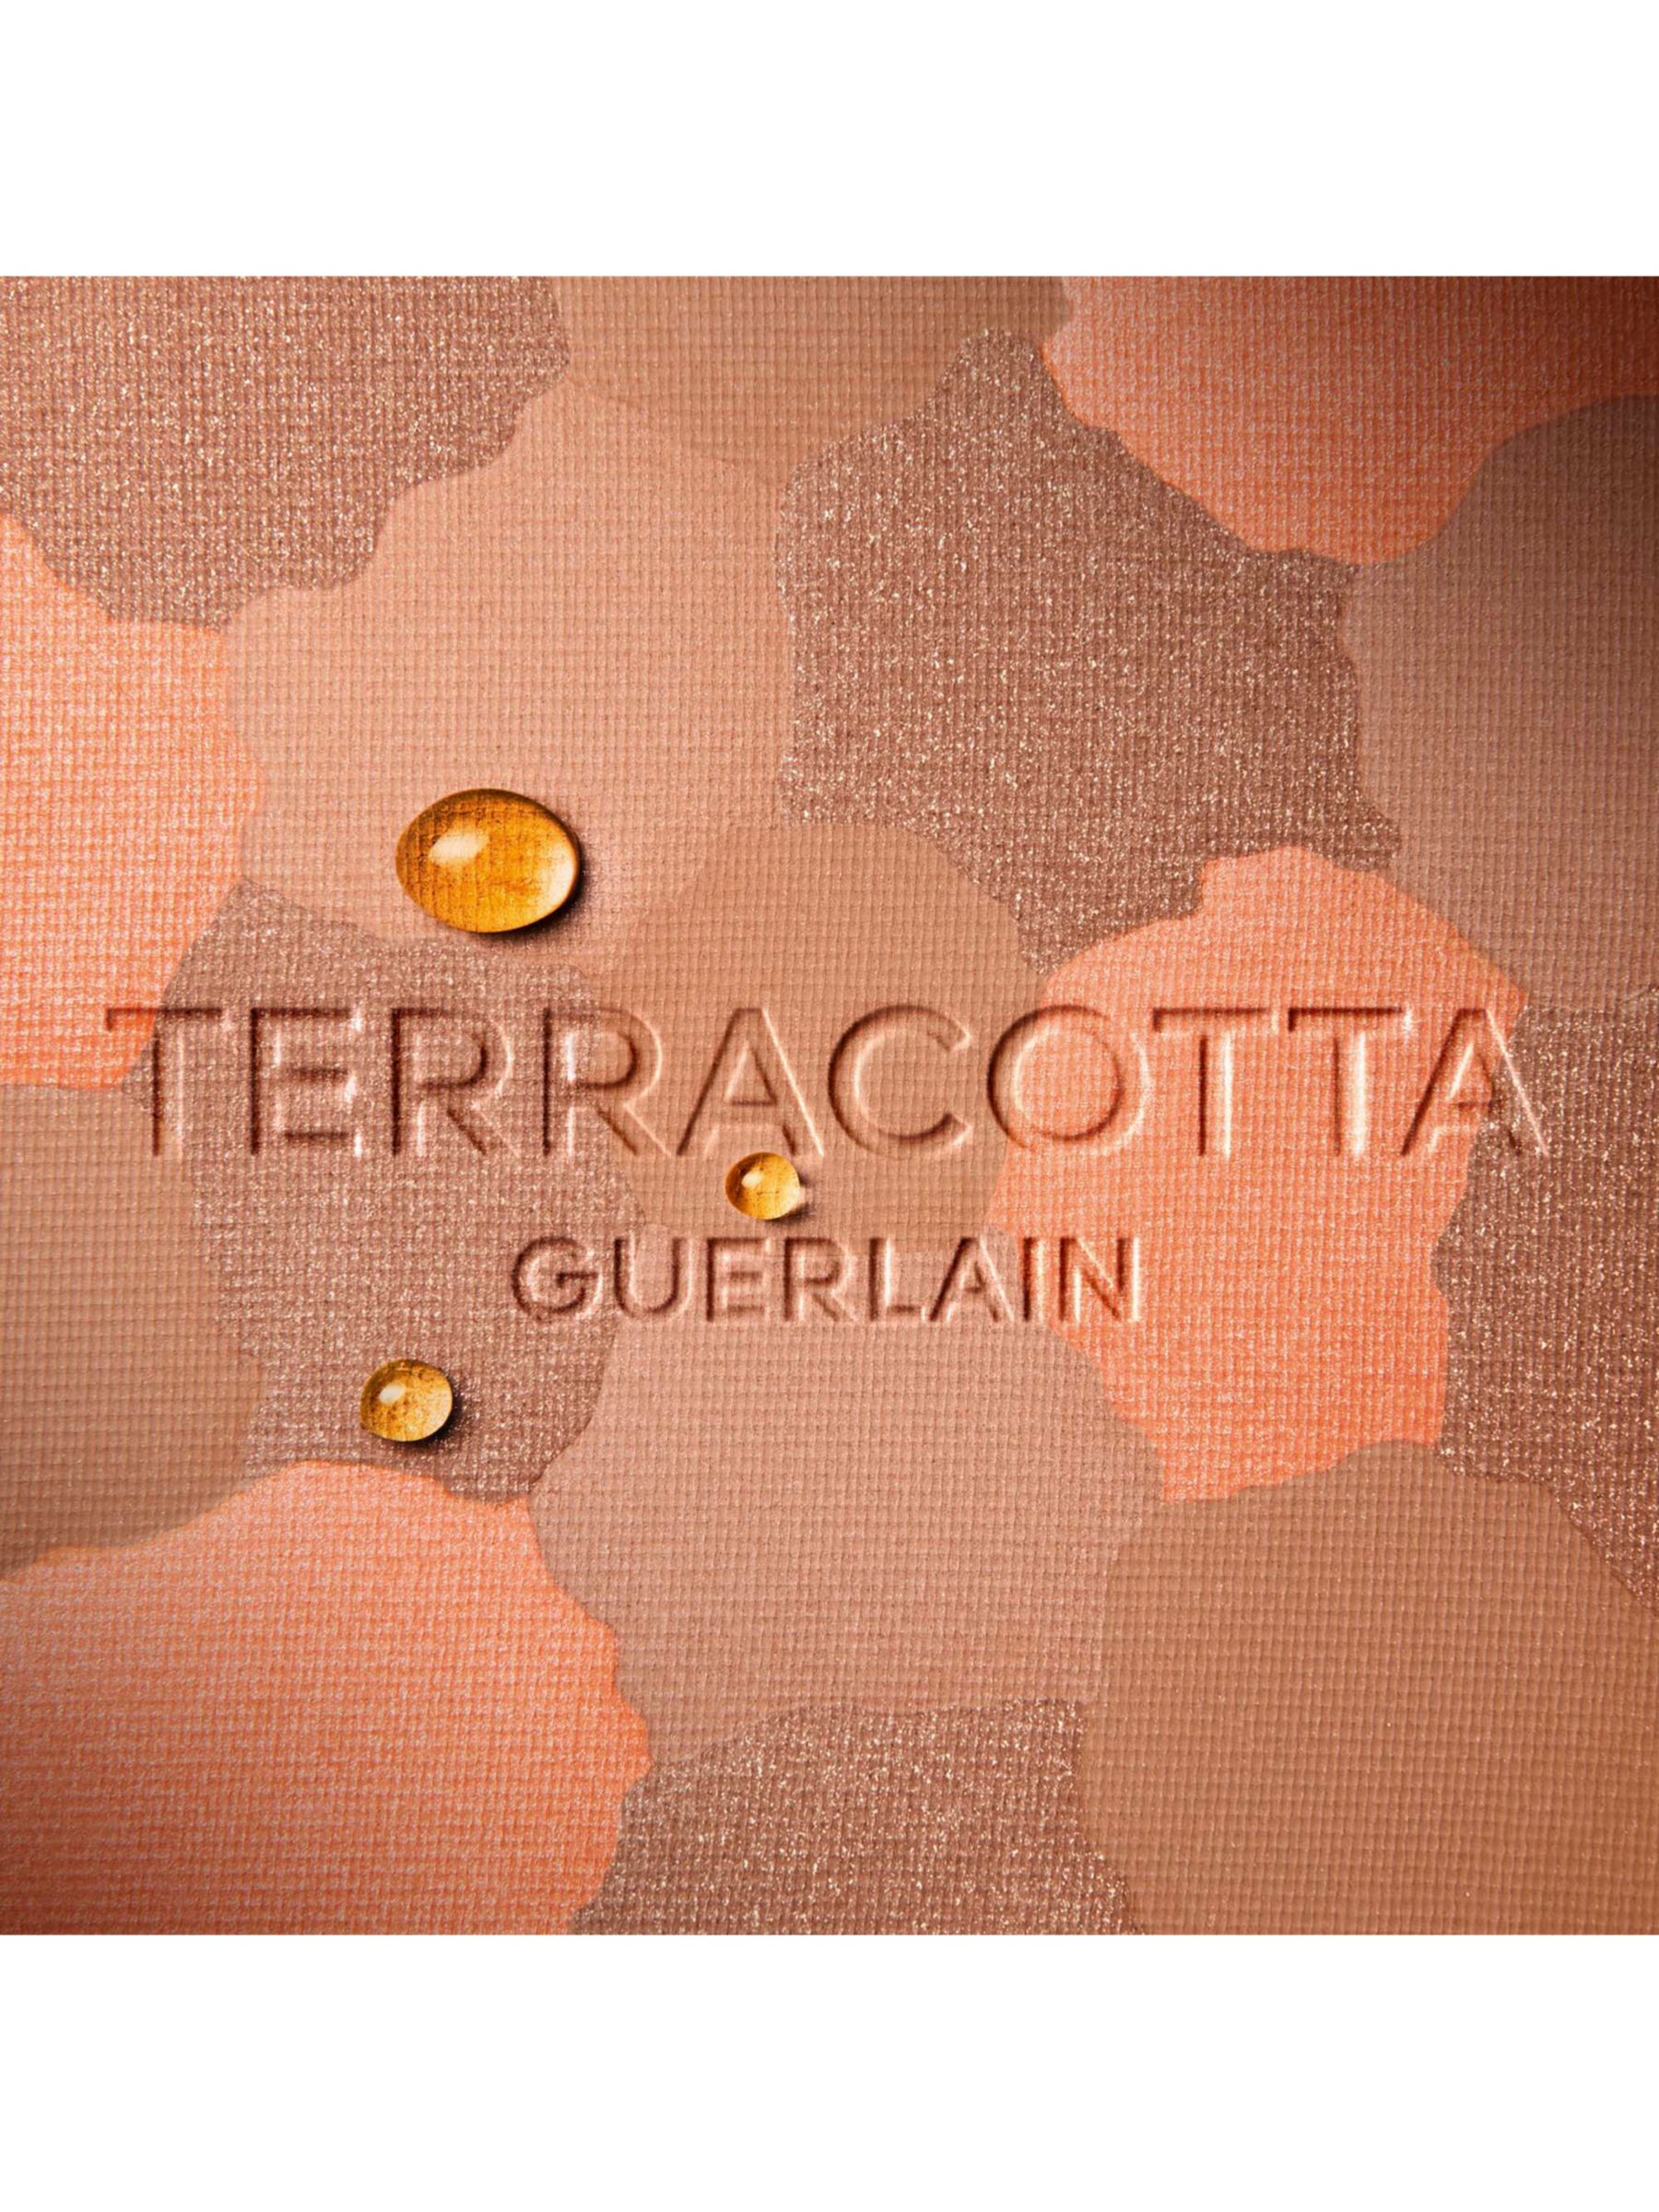 Guerlain Terracotta Light The Sun-Kissed Natural Healthy Glow Powder, 02 Medium Cool 6